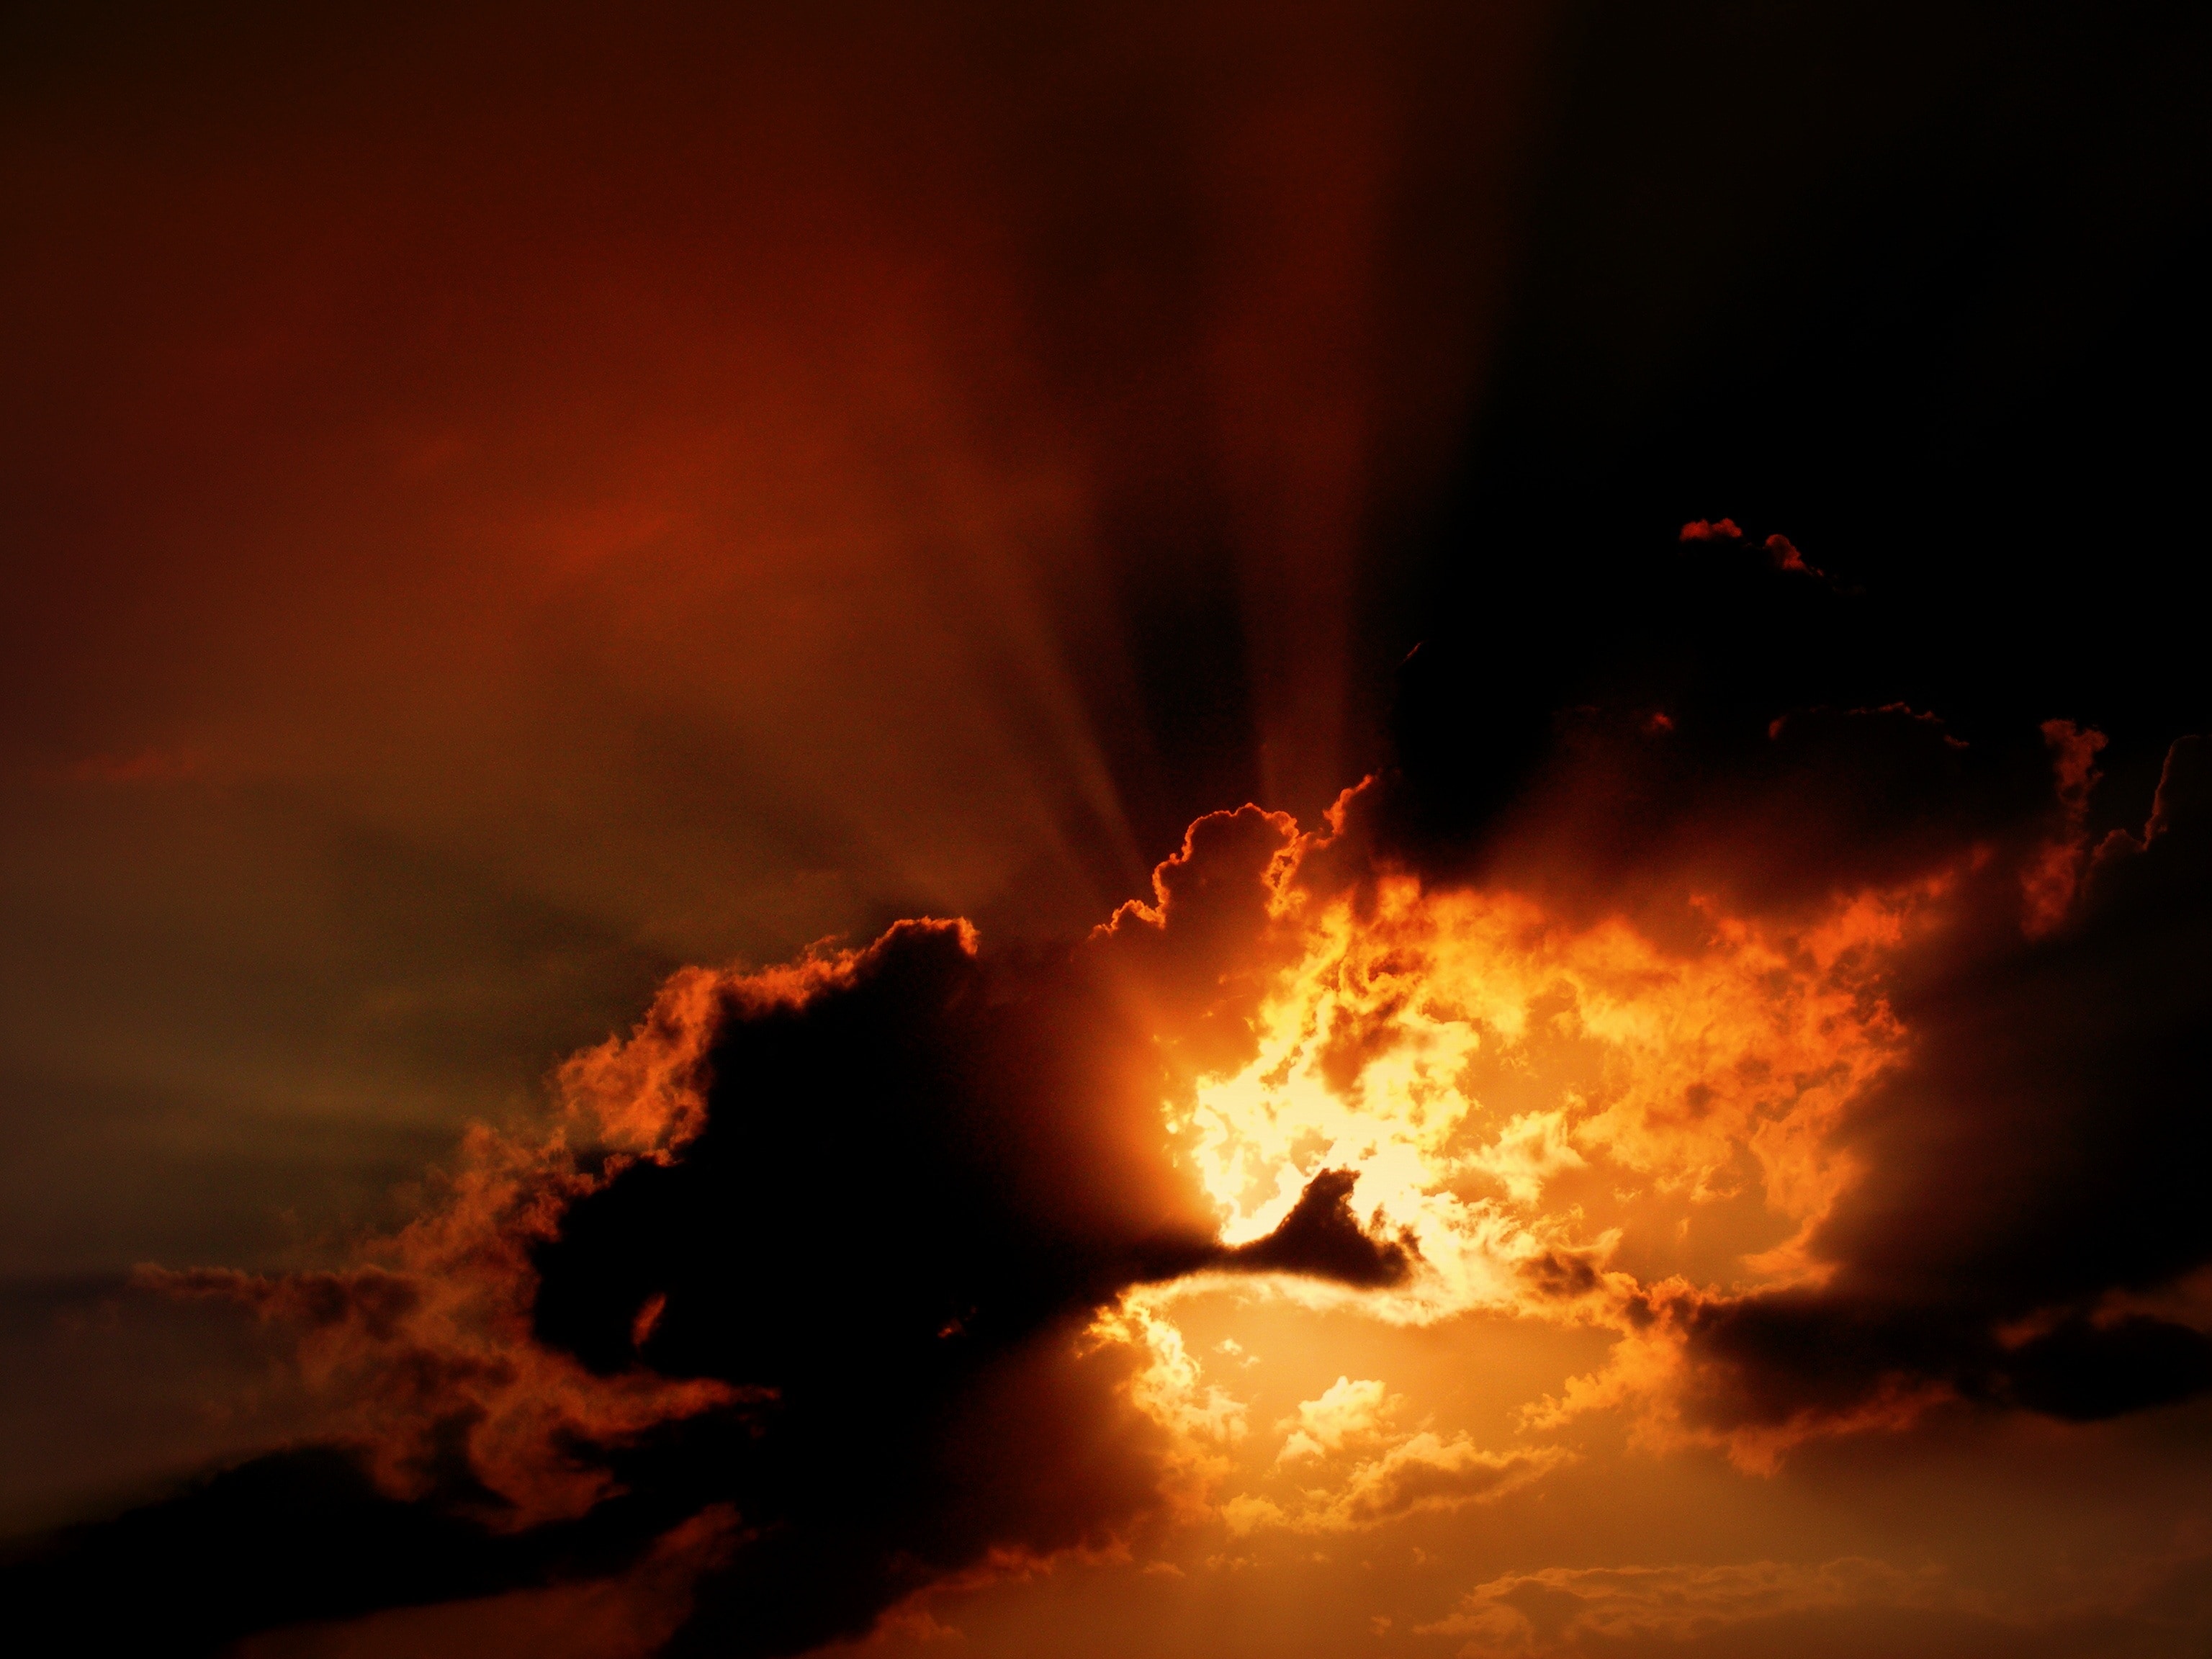 Sunset, Sun, In The Evening, Cloud, Fire, heat - temperature, danger